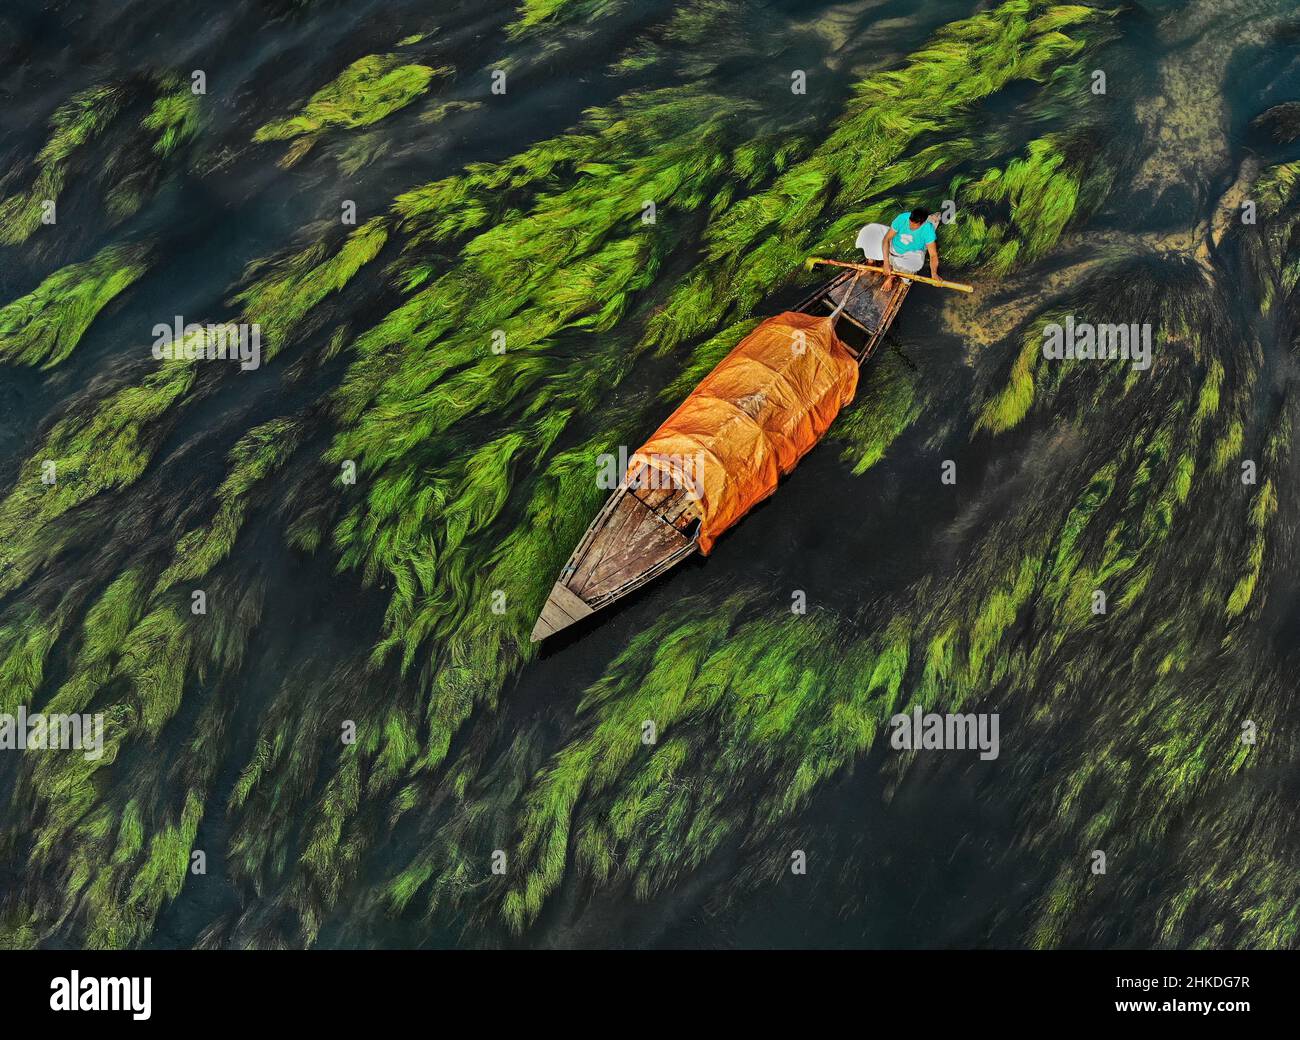 Aerial view of boat making its way through algae, Bogra, Bangladesh Stock Photo